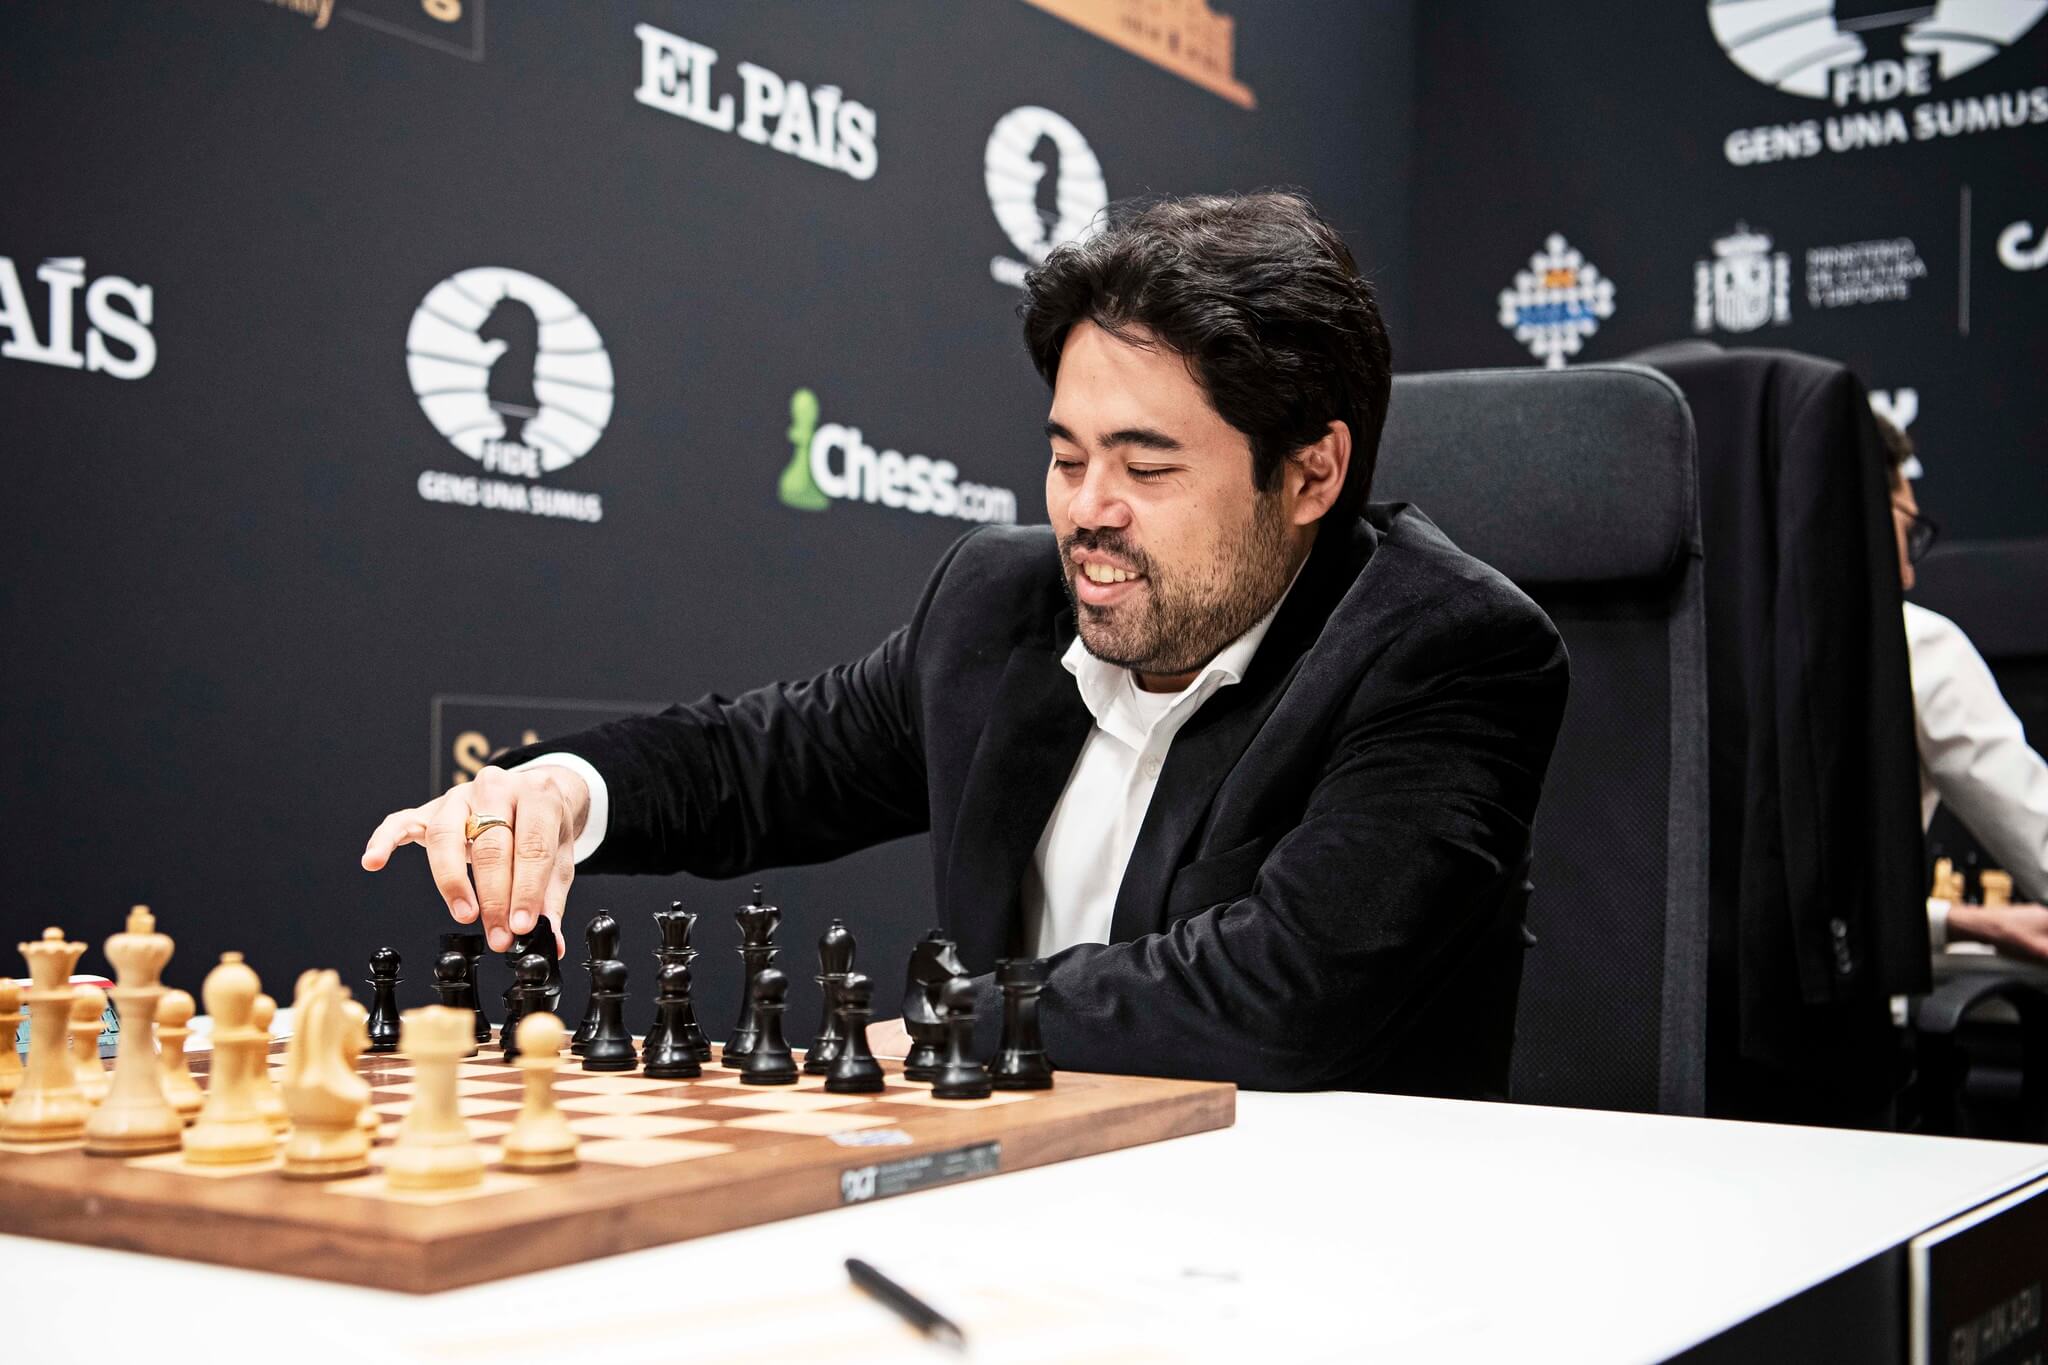 Candidates R11: Nepo wins, Caruana collapses